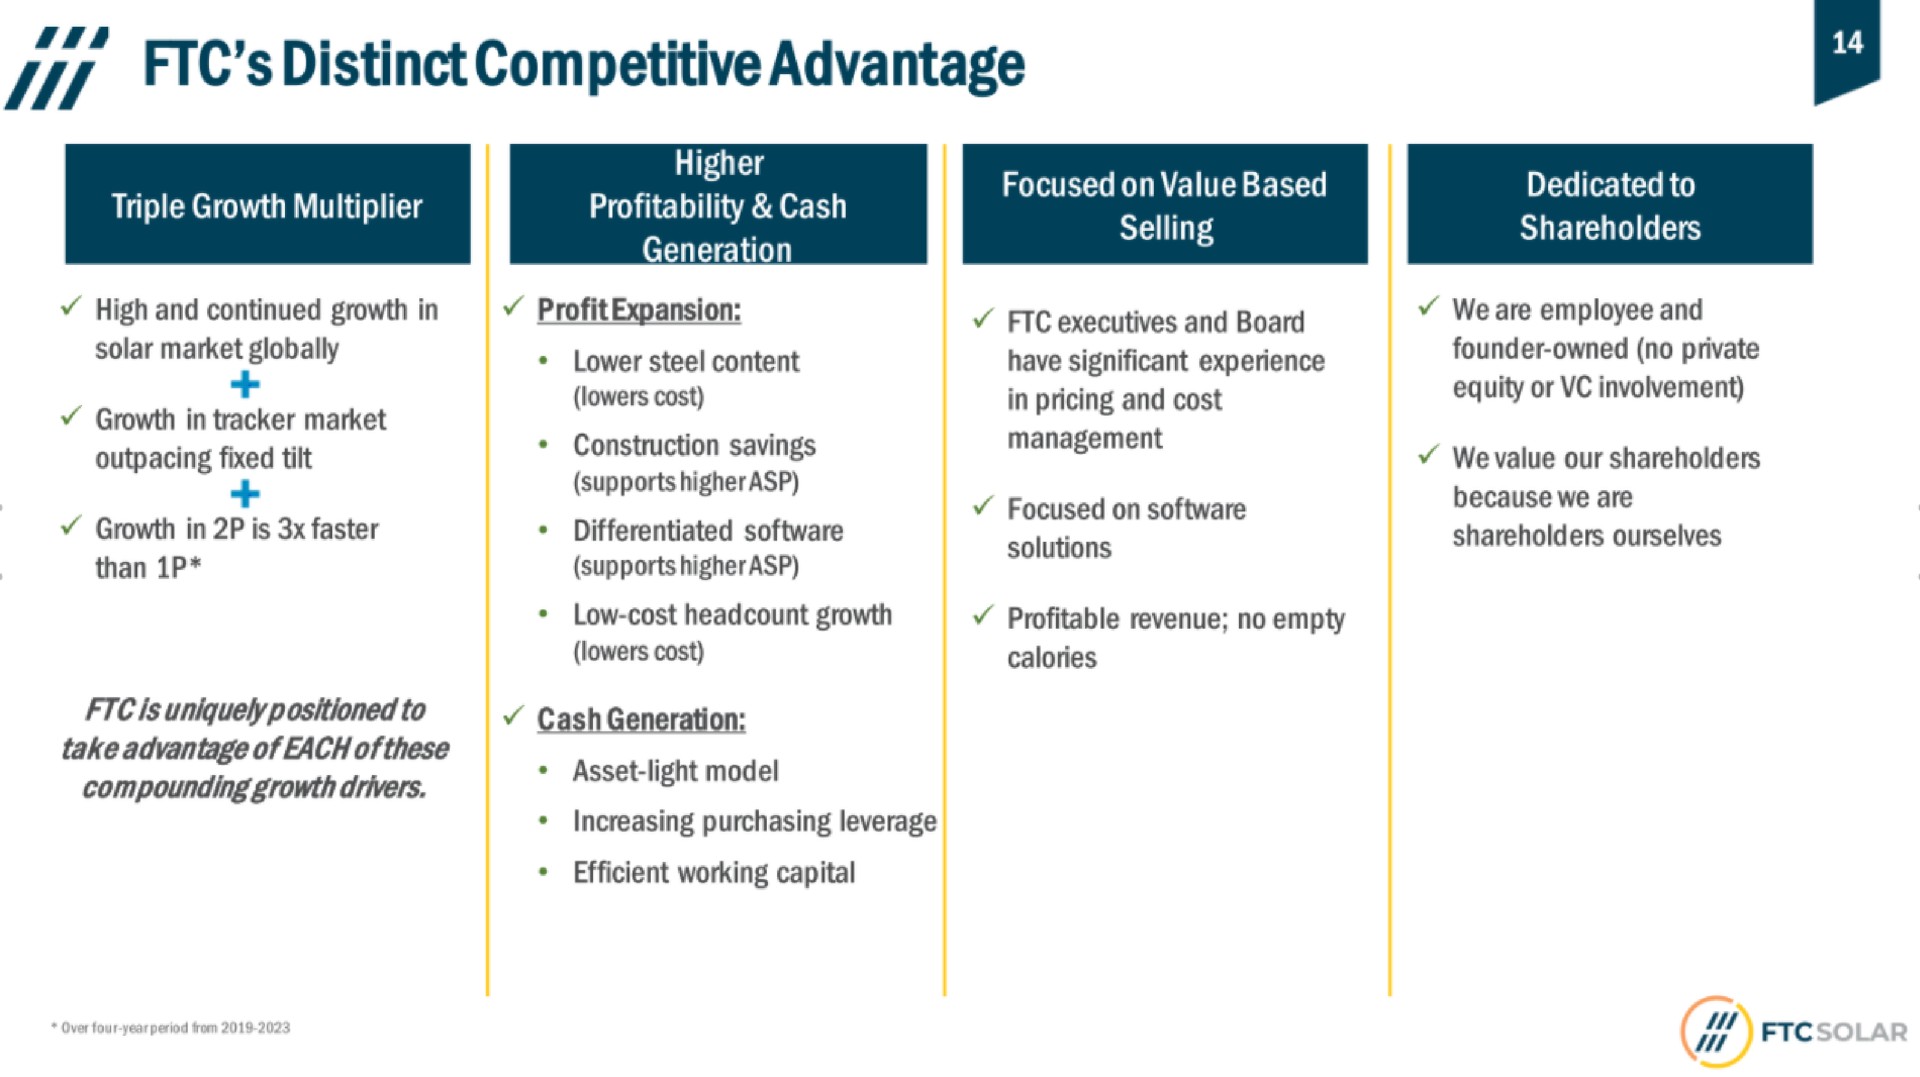 distinct competitive advantage | FTC Solar